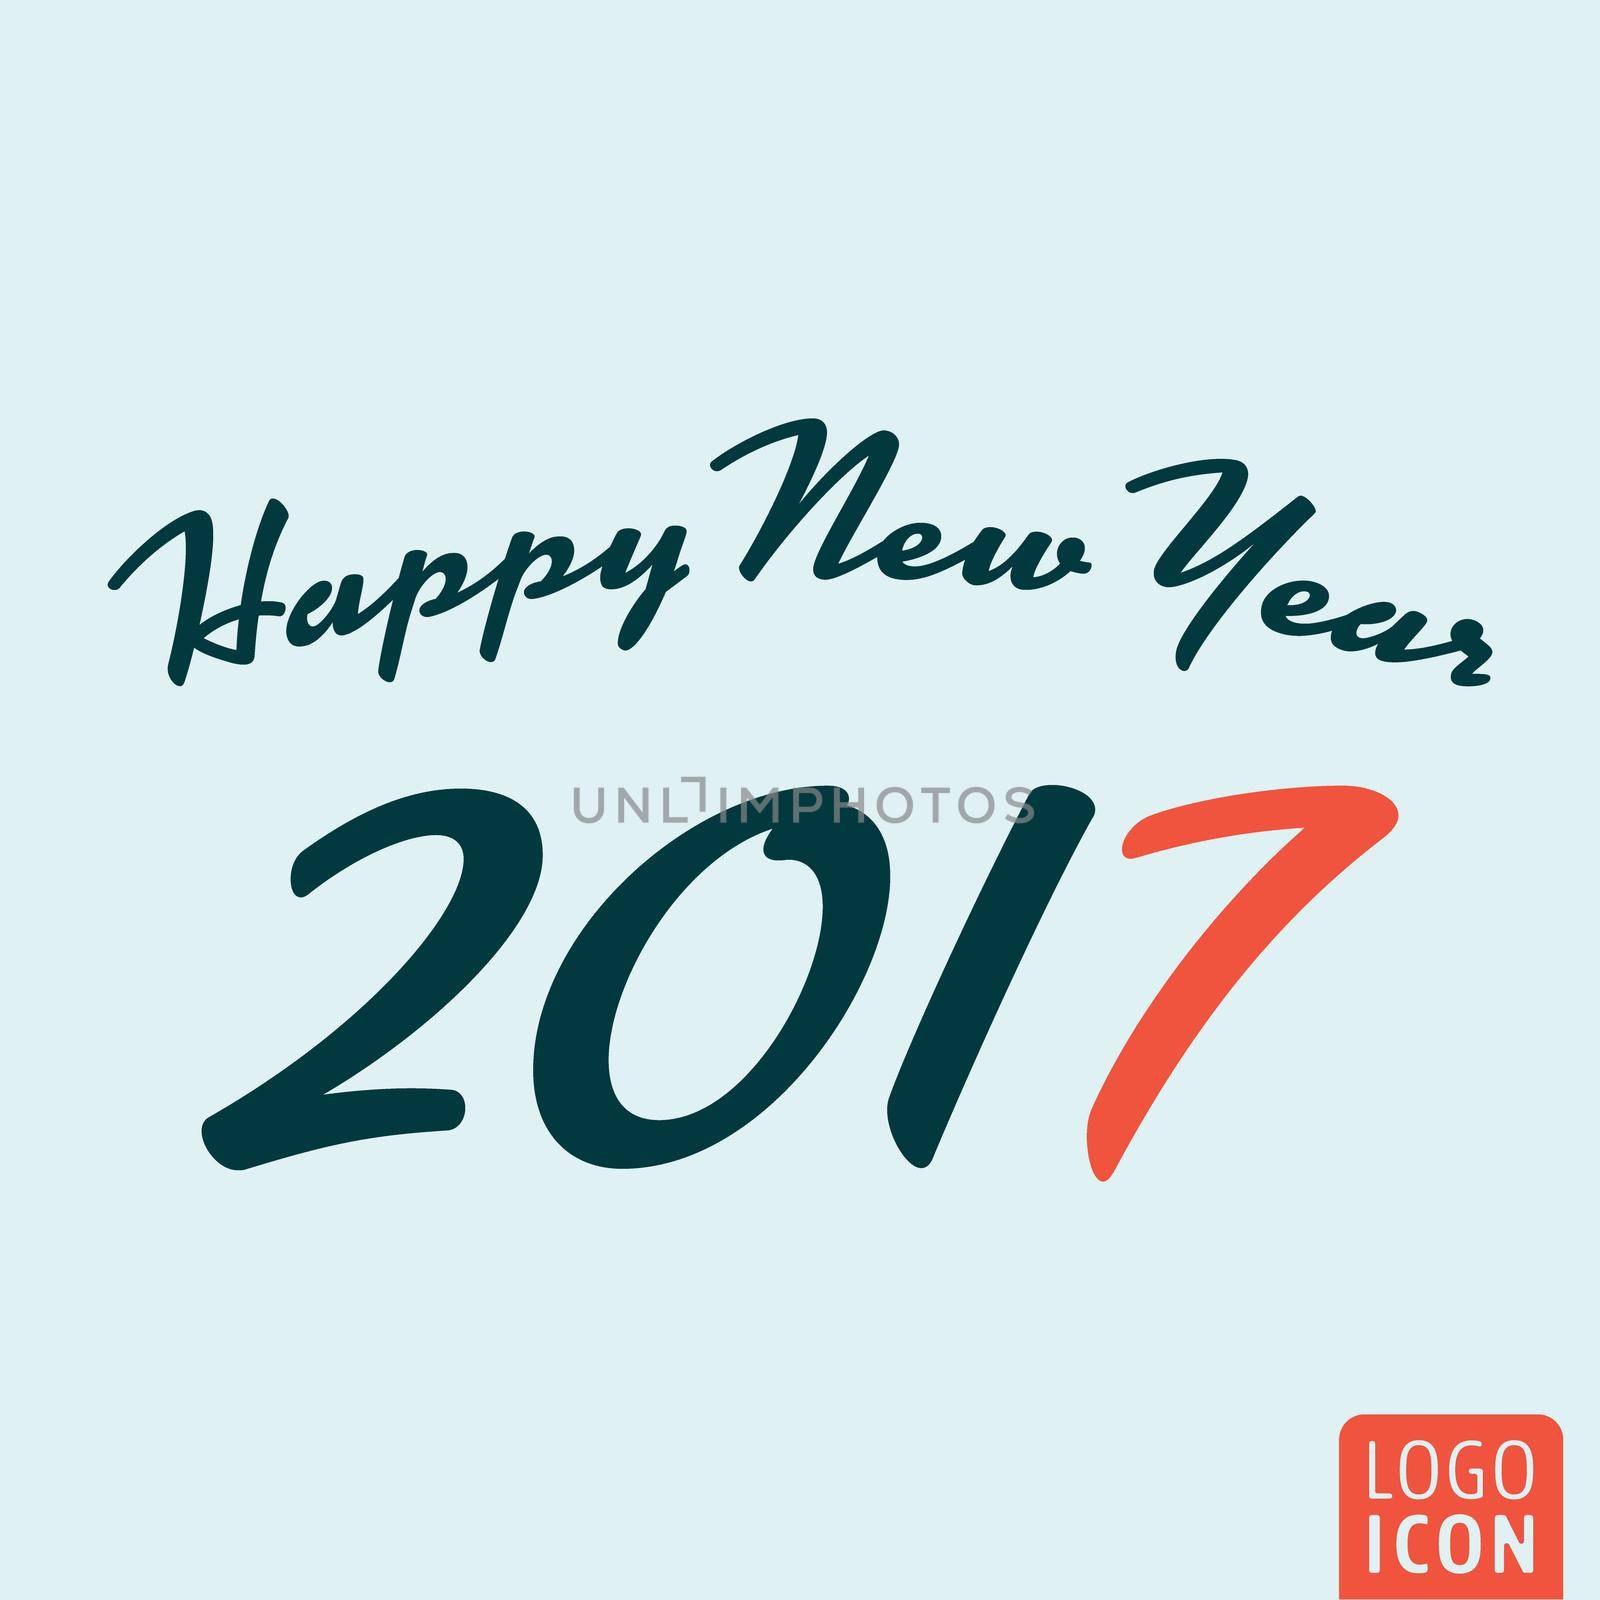 New year 2017 icon by Bobnevv